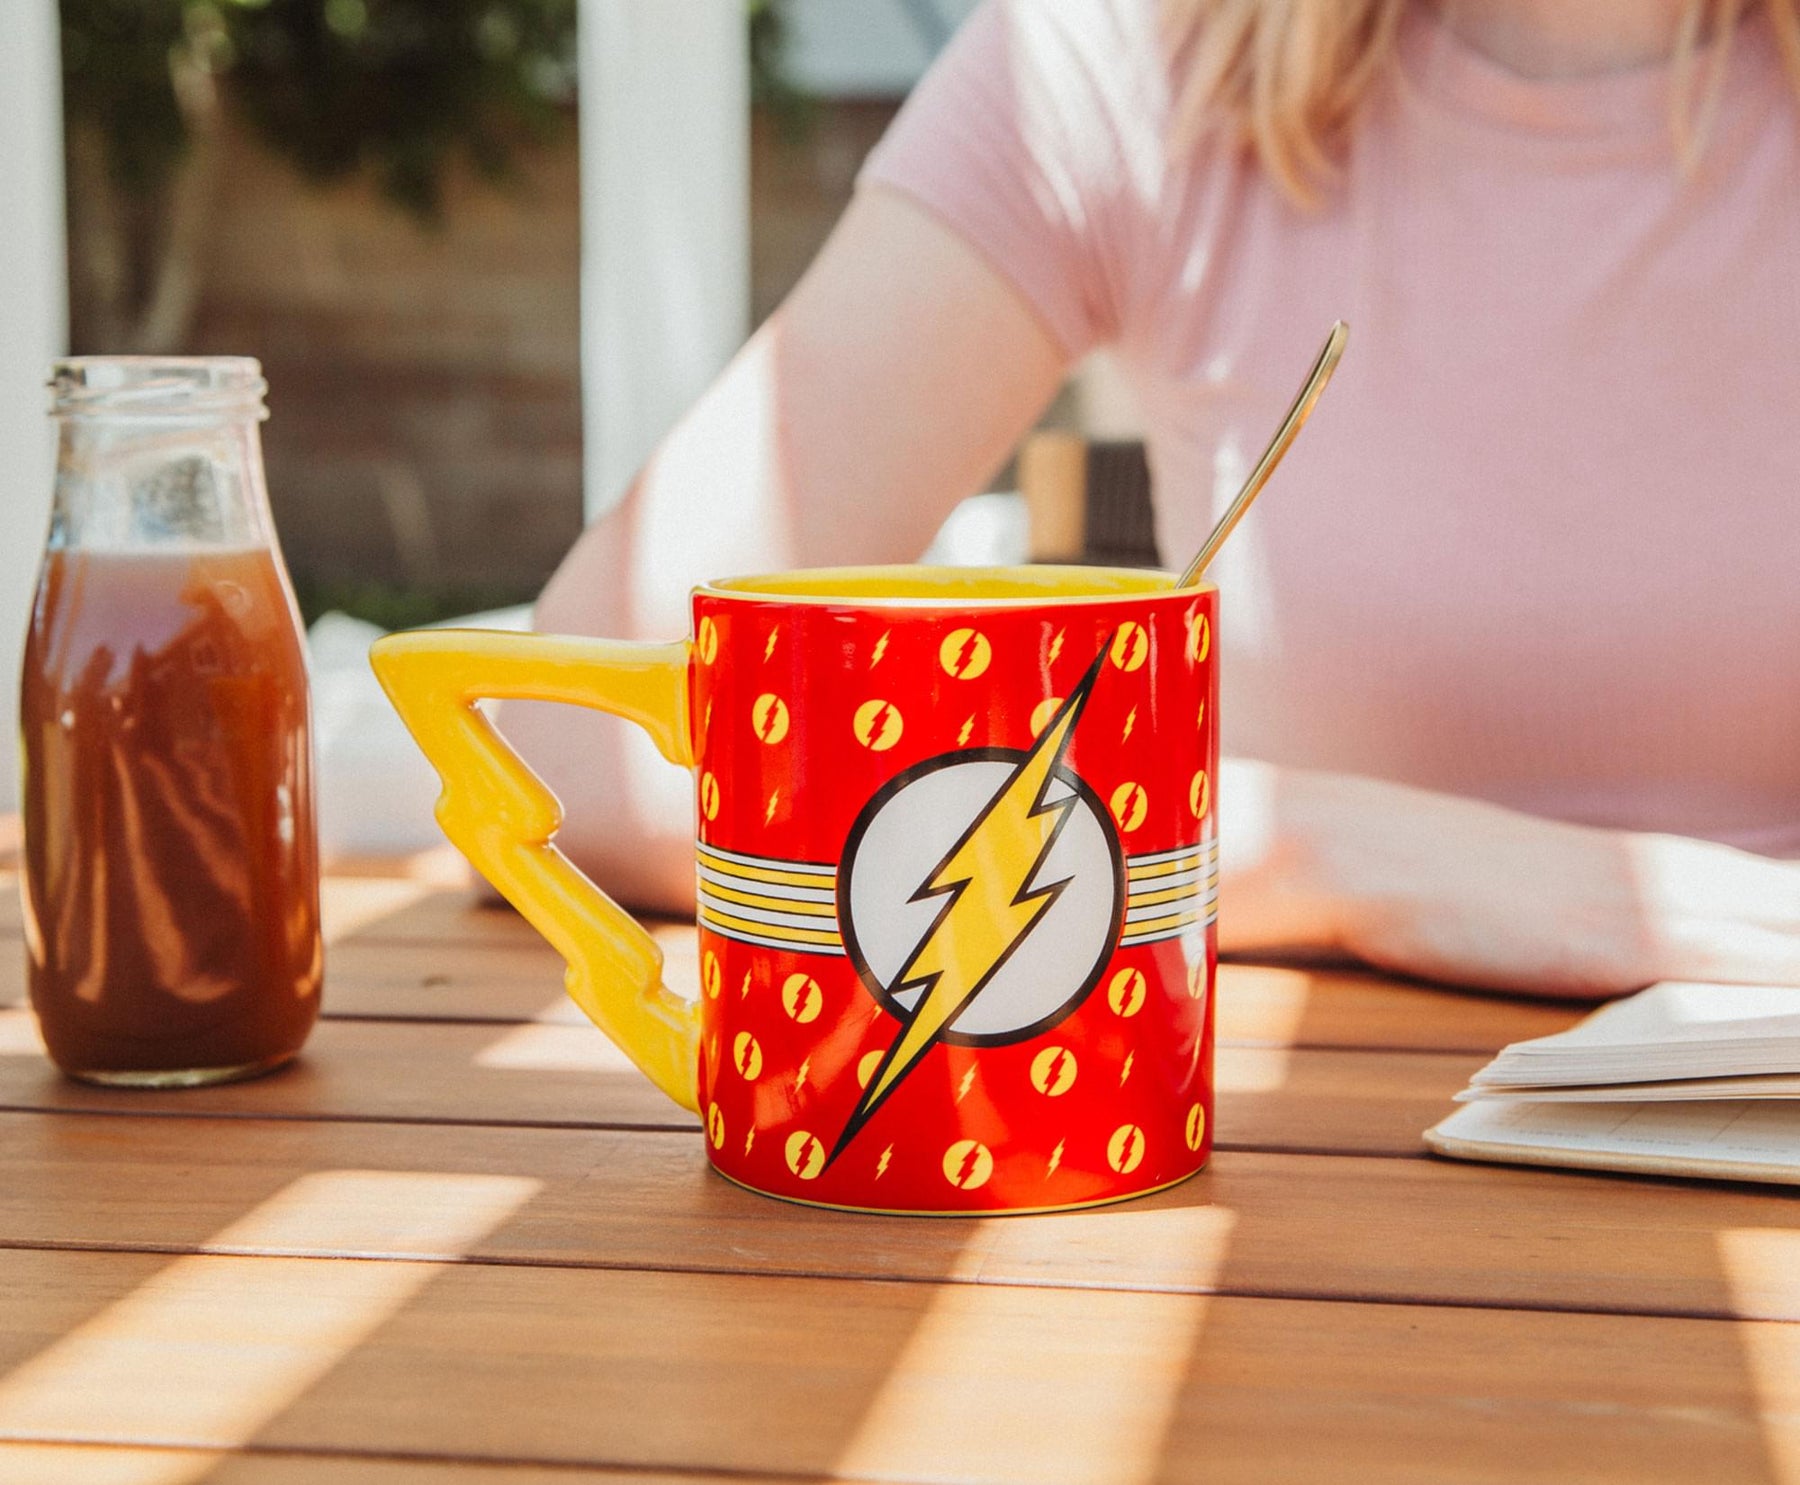 Lightning Bolt Coffee Mug